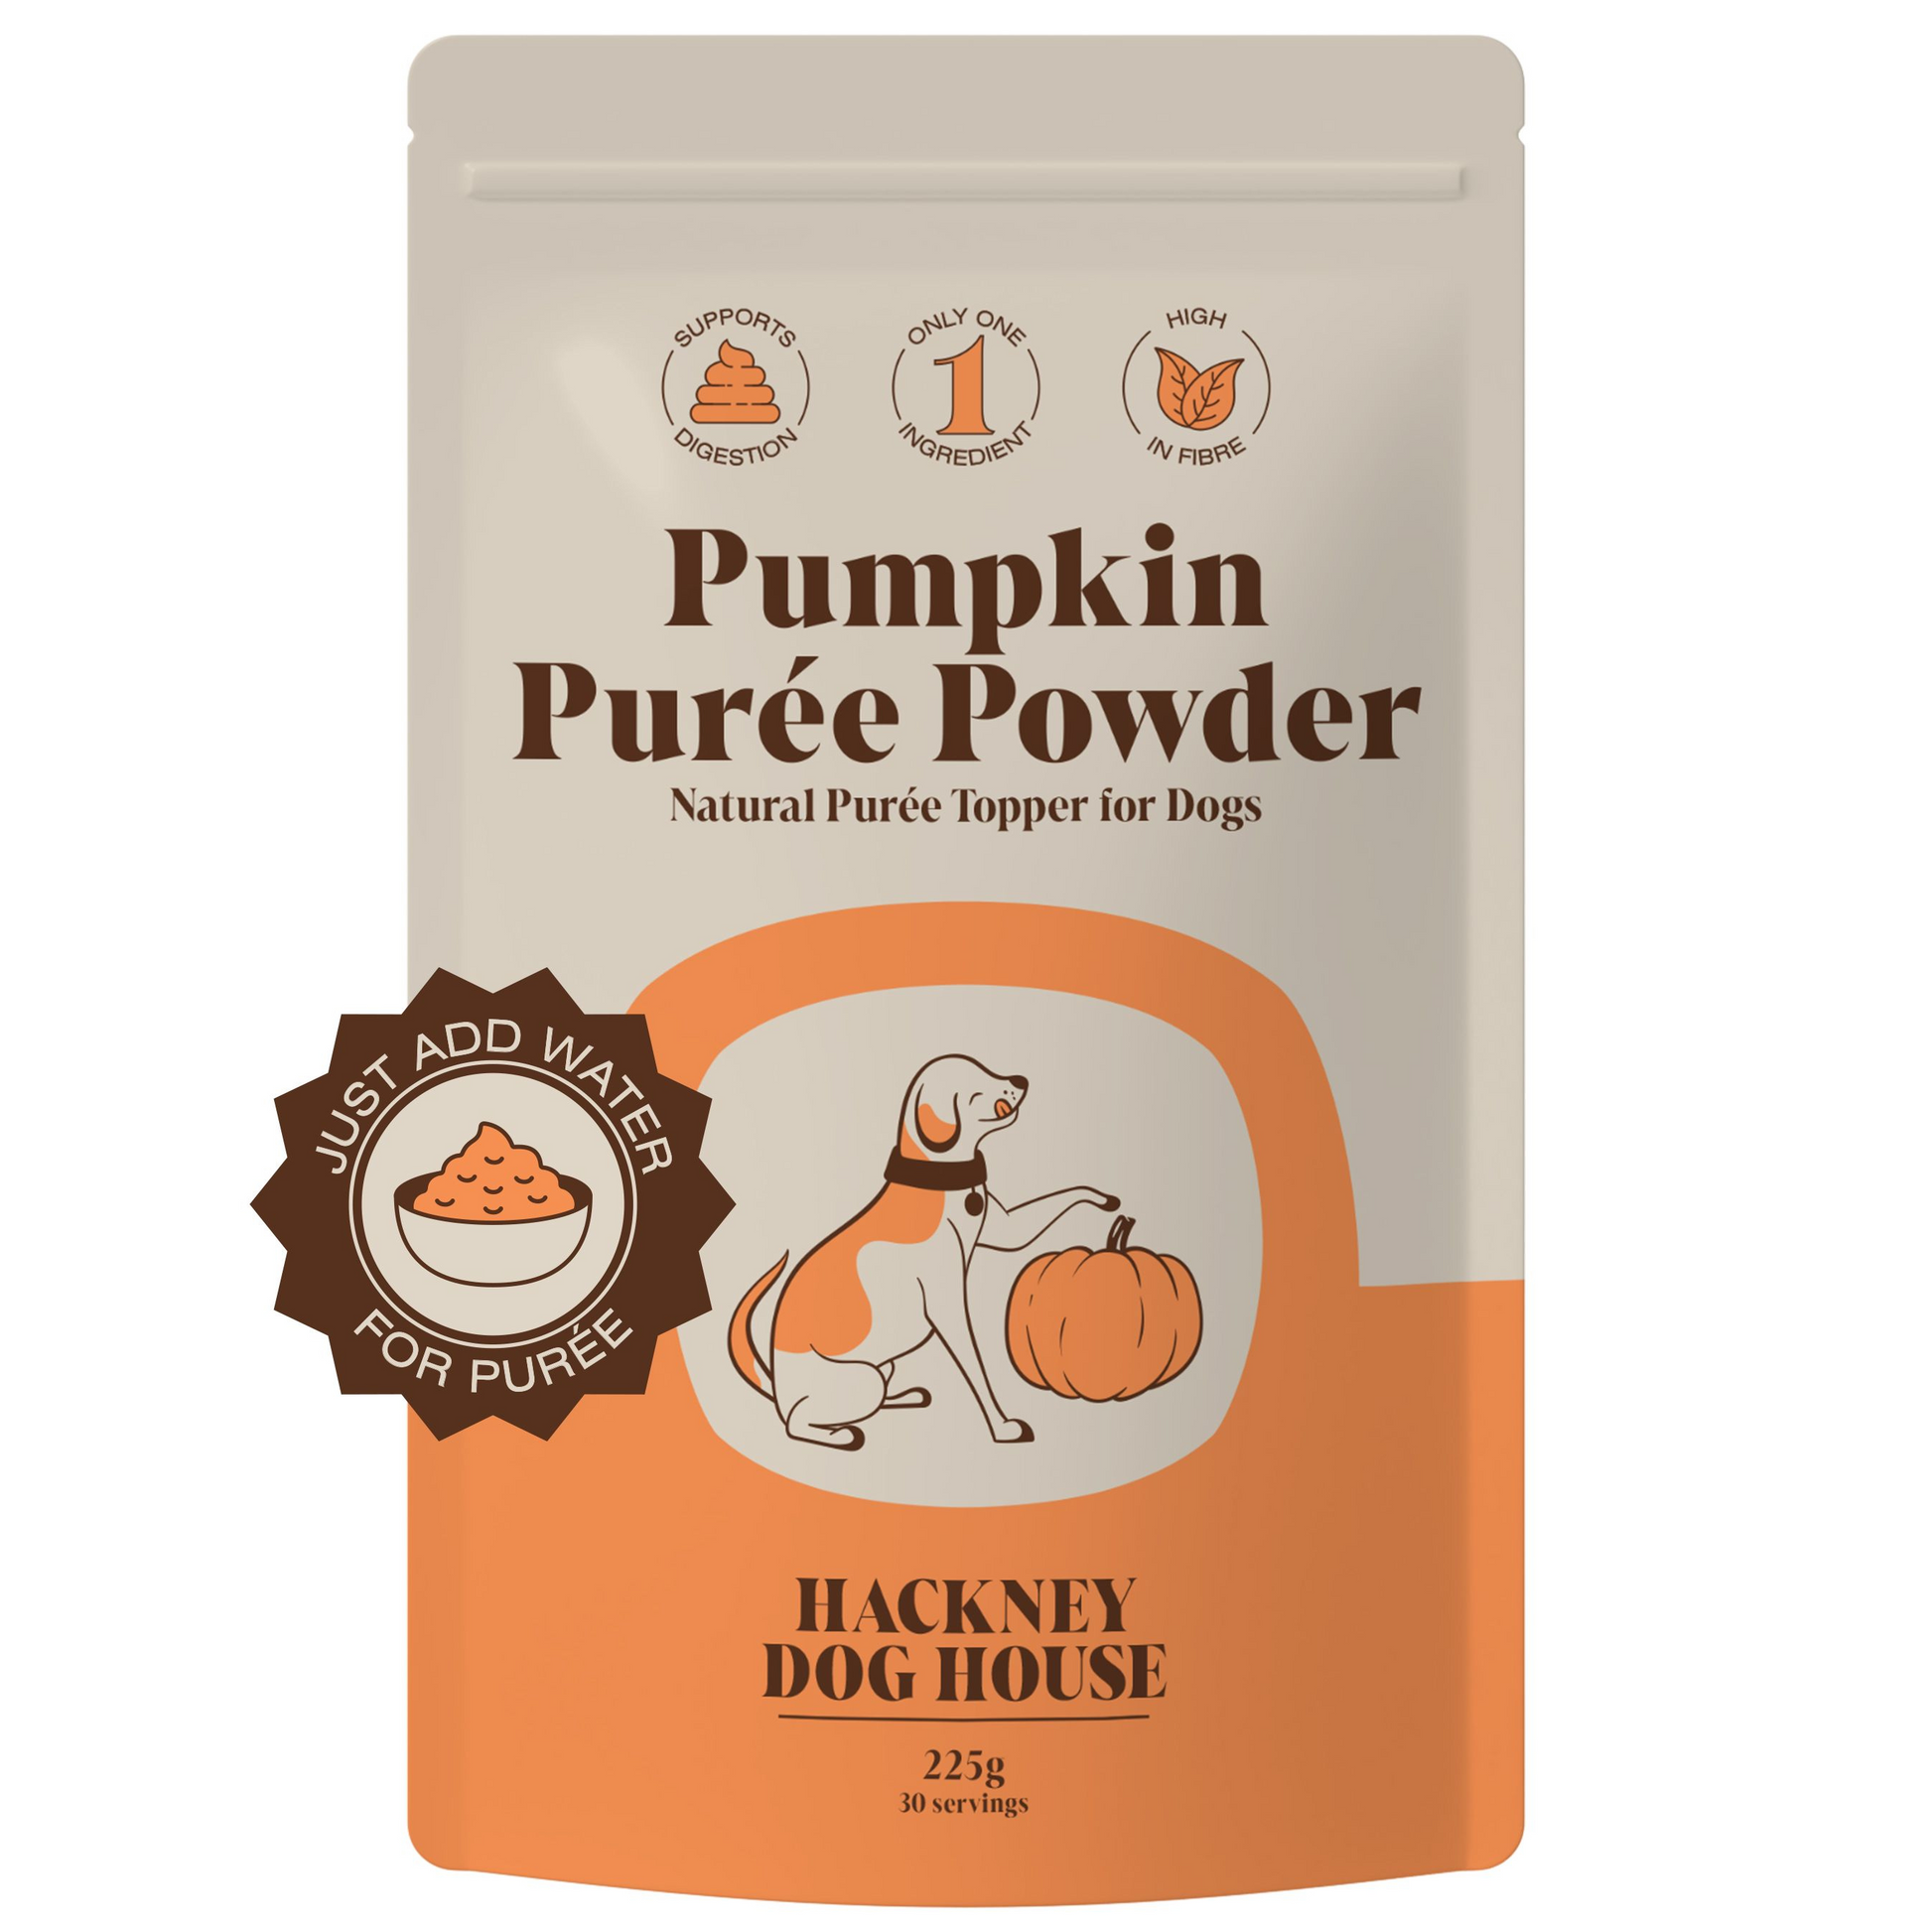 Pumpkin Powder For Dogs Canned Pumpkin Purée Alternative 30 Servings